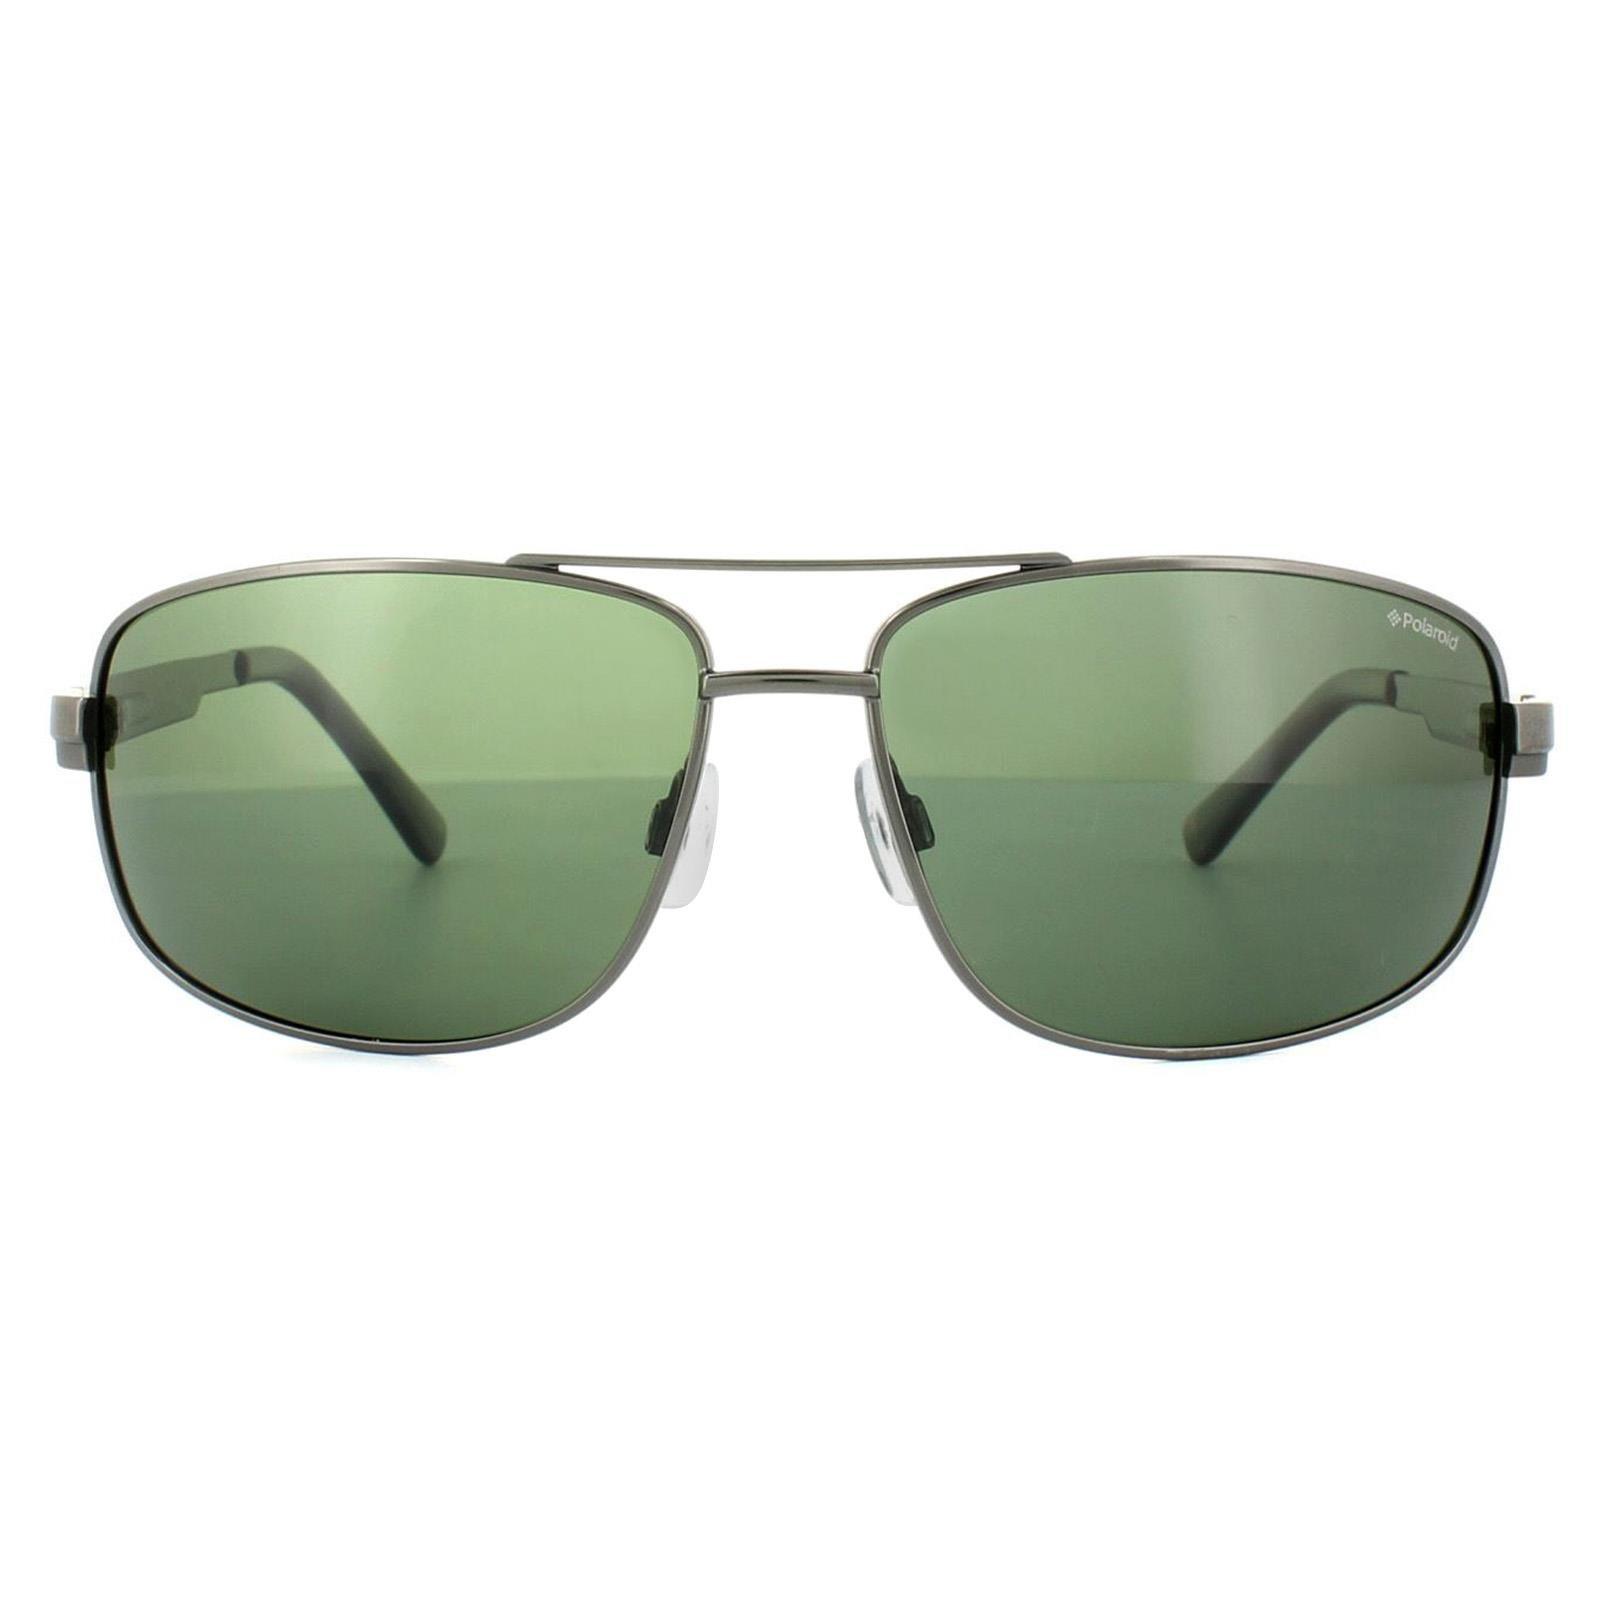 Sunglasses | Aviator Black Green Polarized Sunglasses | Polaroid